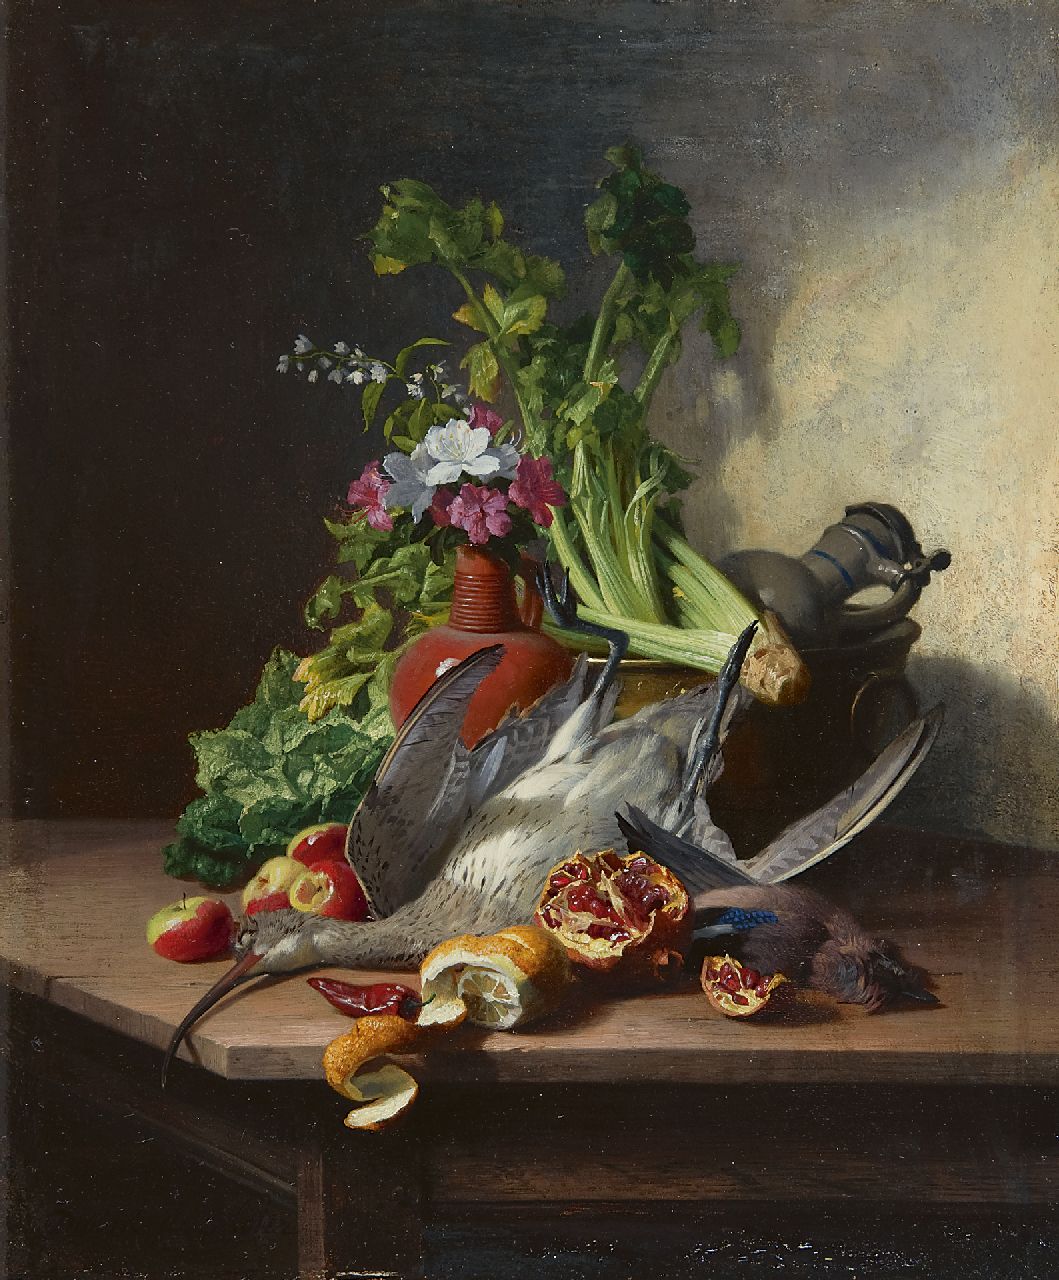 Noter D.E.J. de | 'David' Emile Joseph de Noter, A still life with a woodcock, a jay, vegetables, fruit, flowers and earthenware jugs, oil on panel 32.3 x 27.2 cm, signed l.l.